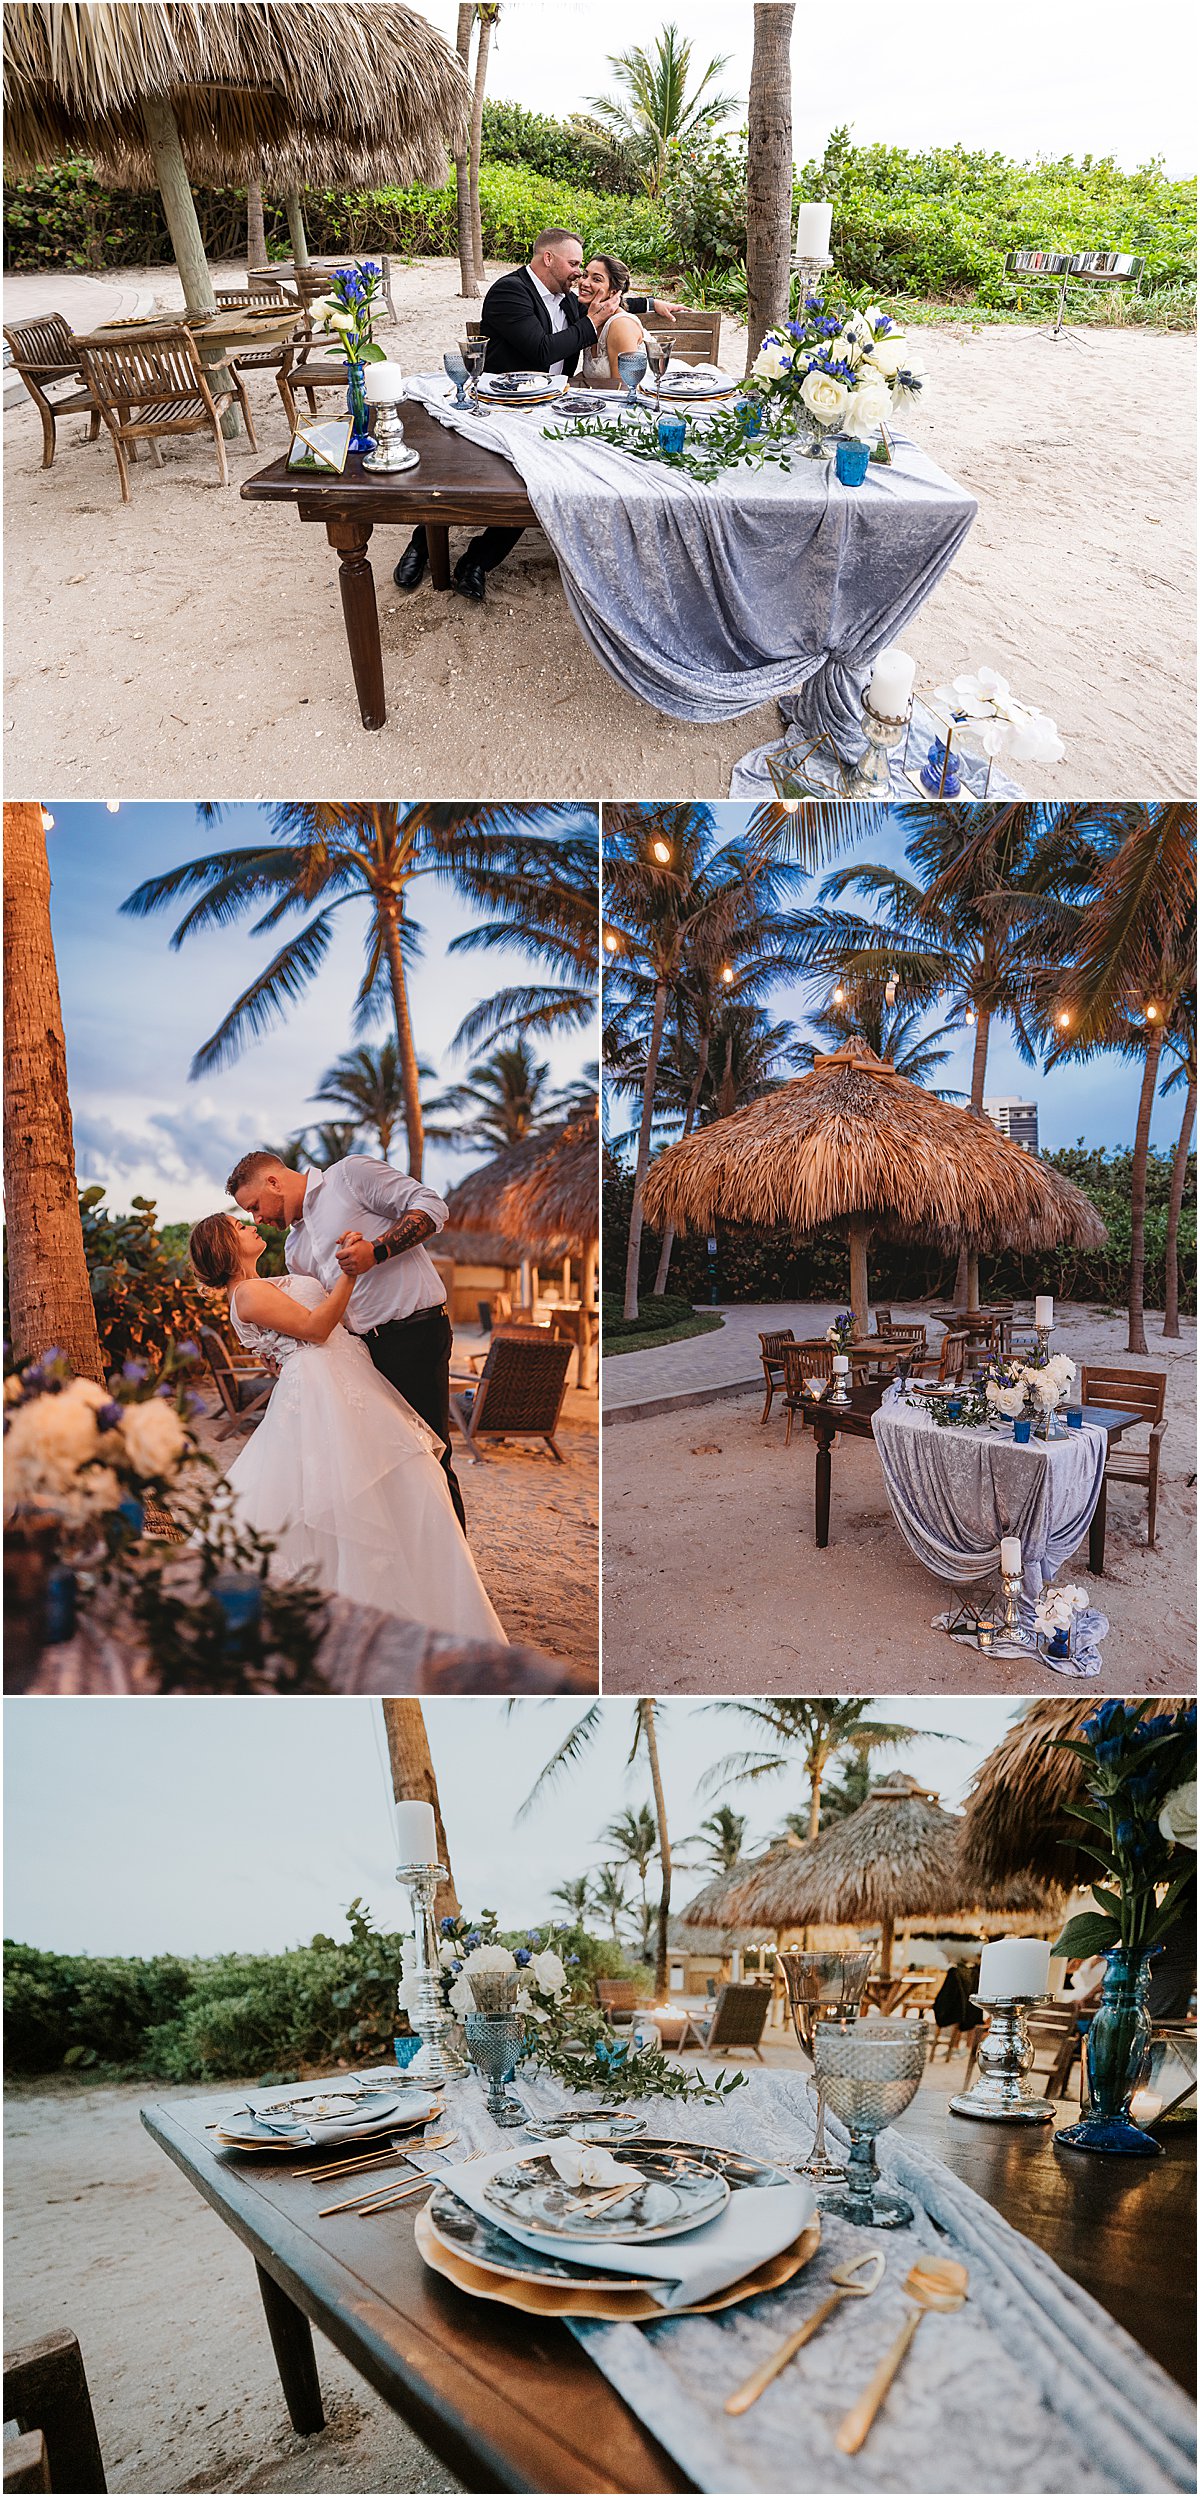 Intimate Outdoor Wedding | Palm Beach Marriott Singer Island Resort | Palm Beach Florida | Married in Palm Beach | www.marriedinpalmbeach.com | Organic Moments Photography